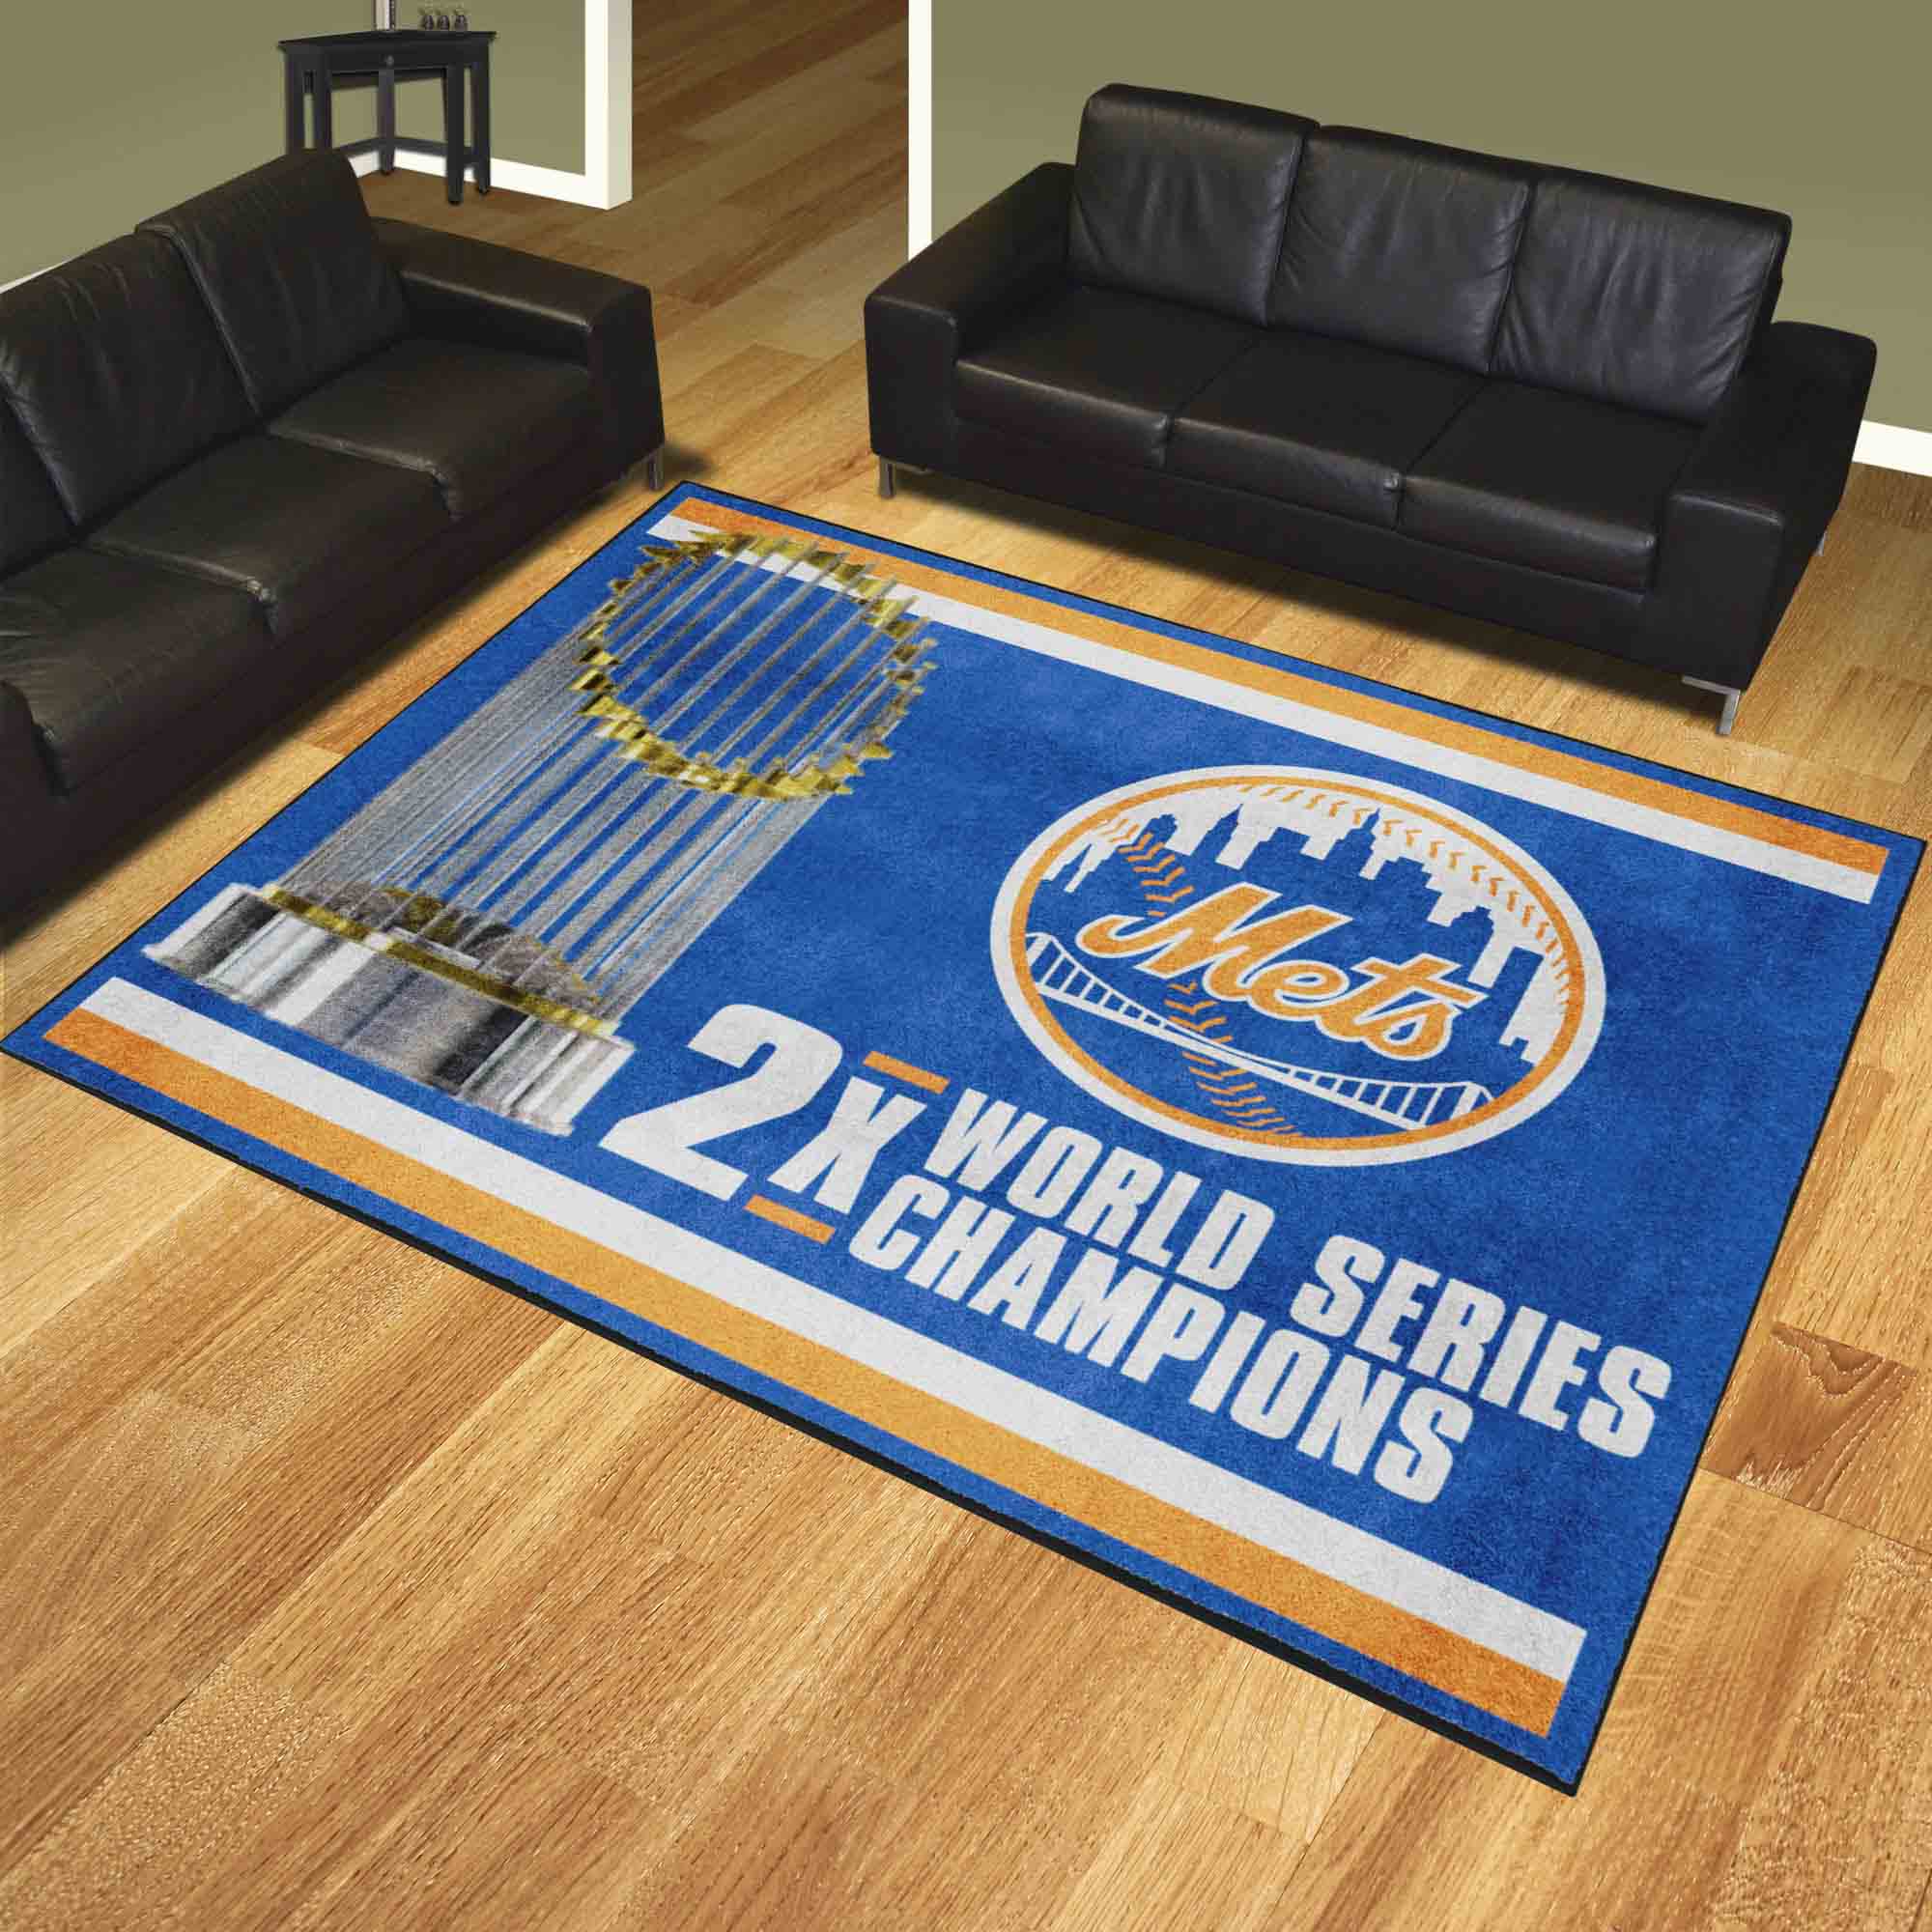 New York Mets Area Rug - Dynasty 8' x 10' Nylon